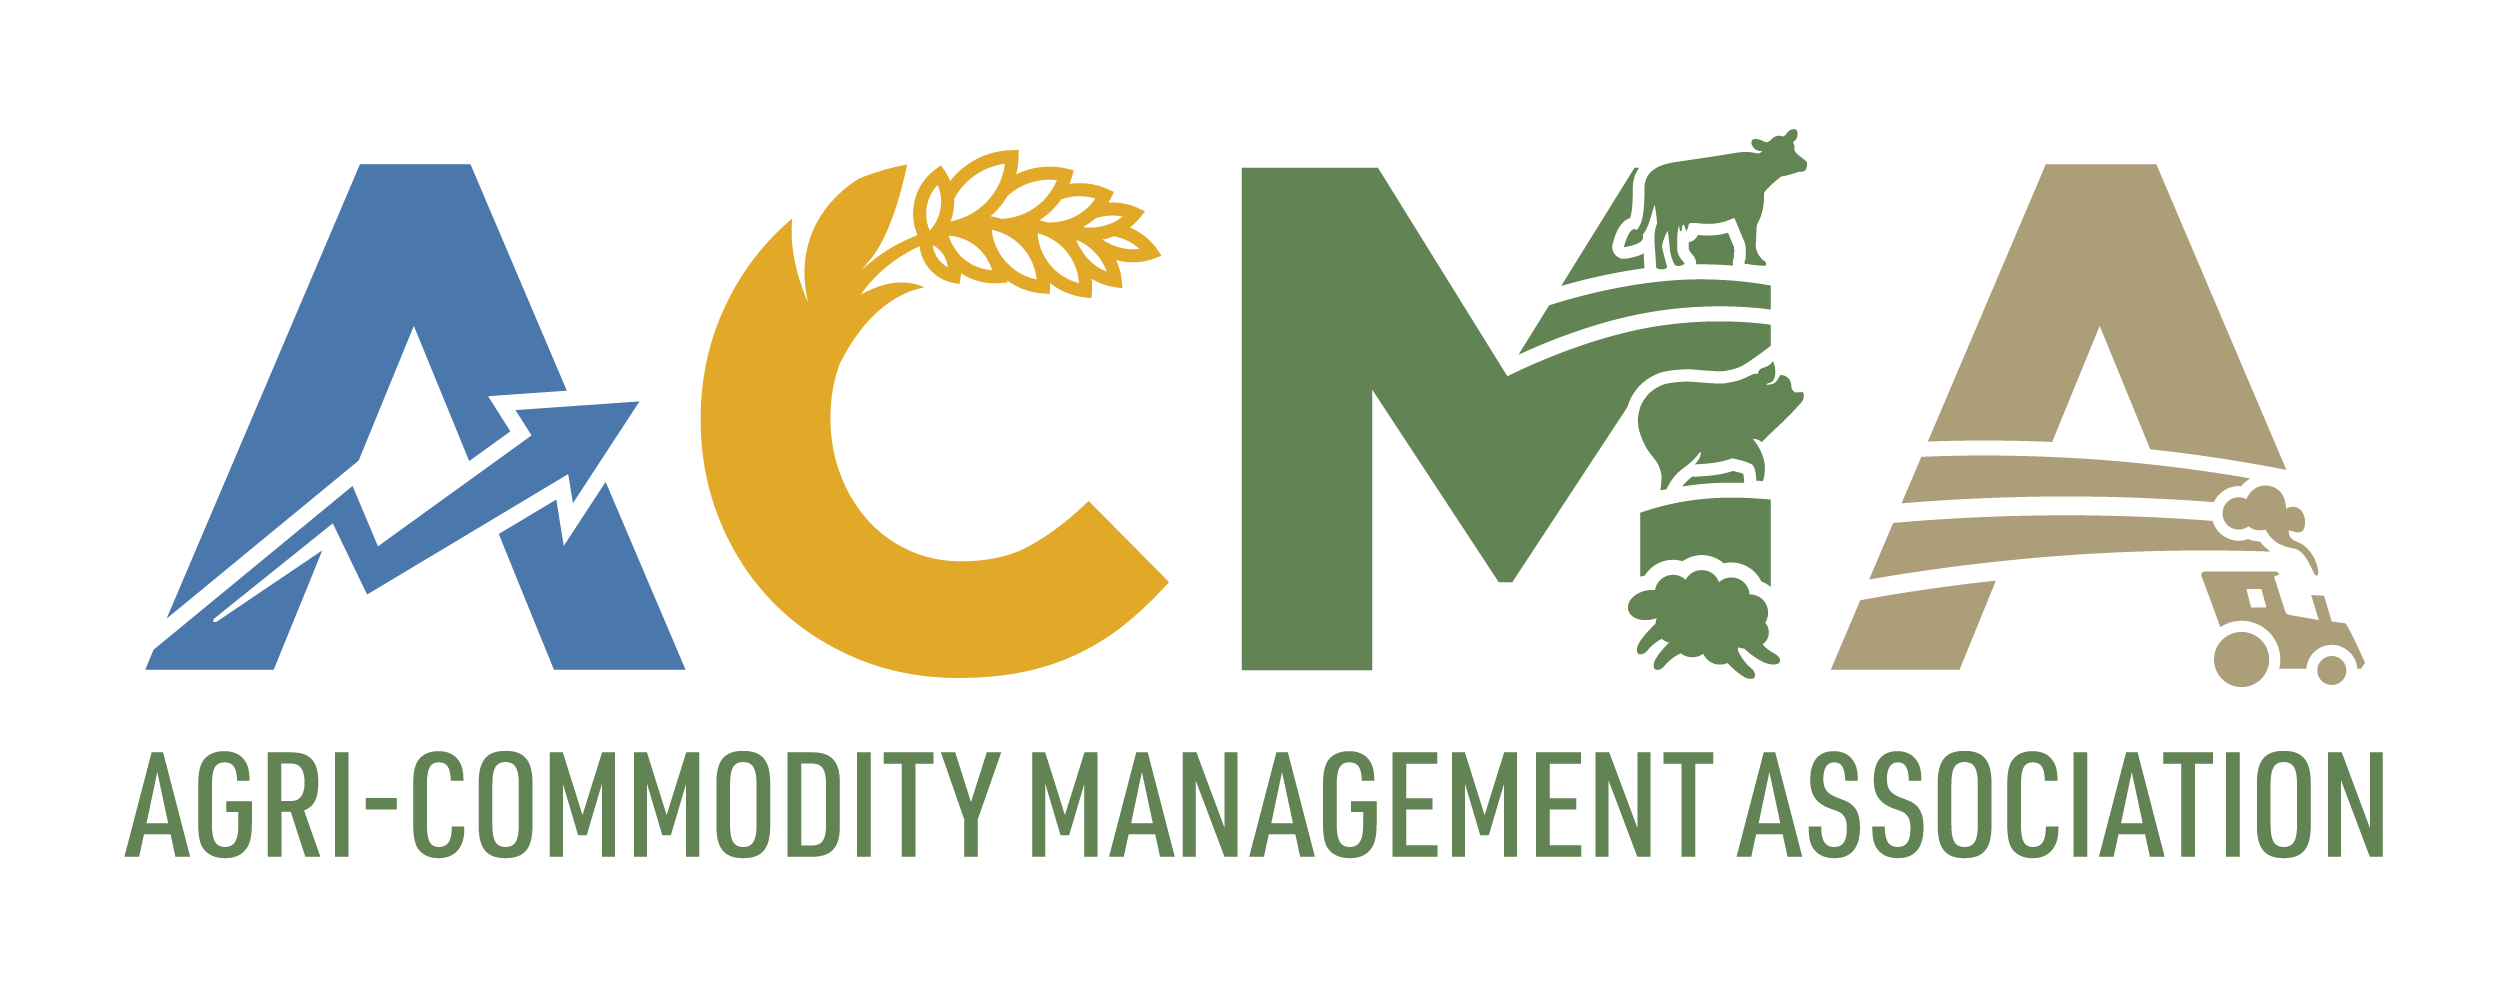 Agri-Commodity Management Association